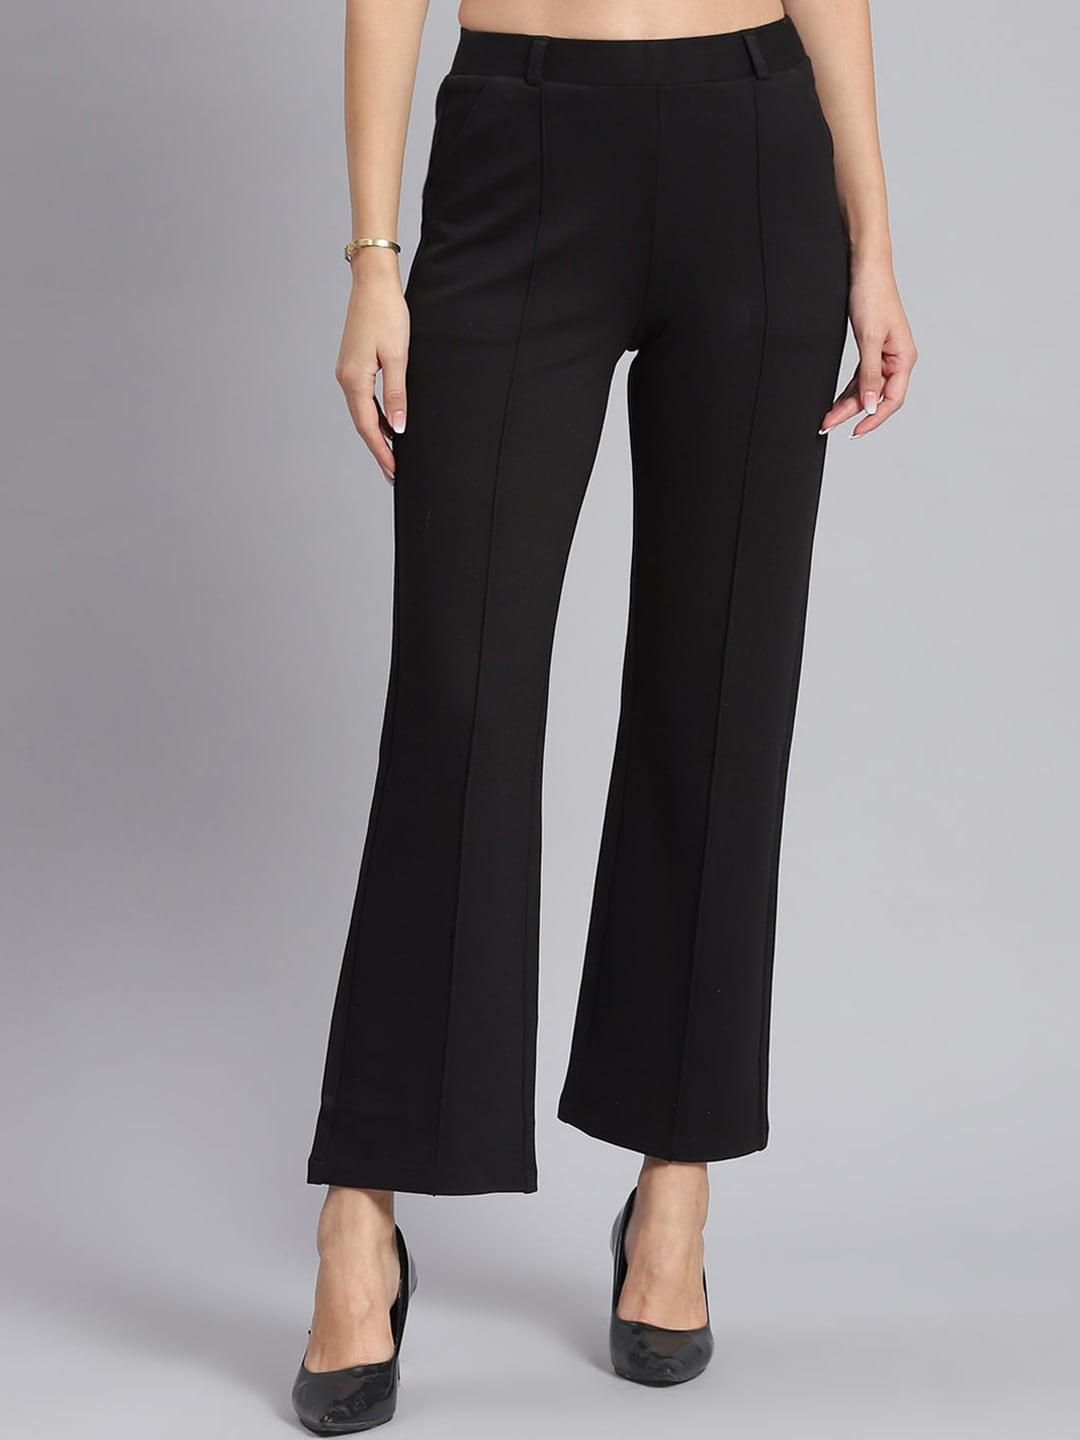 monte-carlo-women-black-trousers